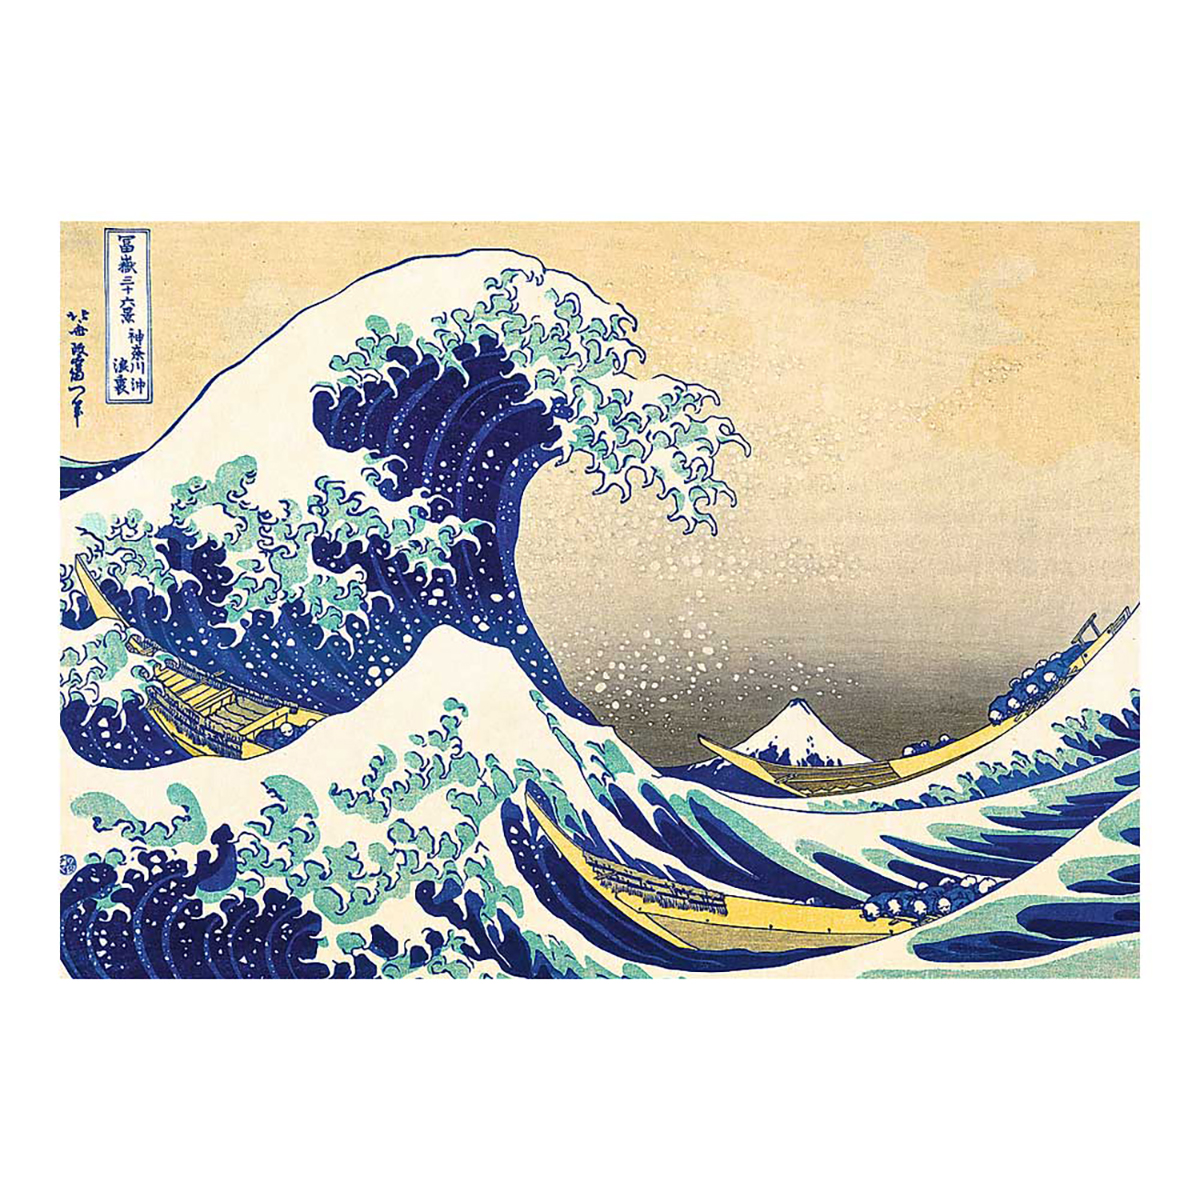 TREFL Hokusai Katsushika: Die Kanagawa Puzzle große von Welle